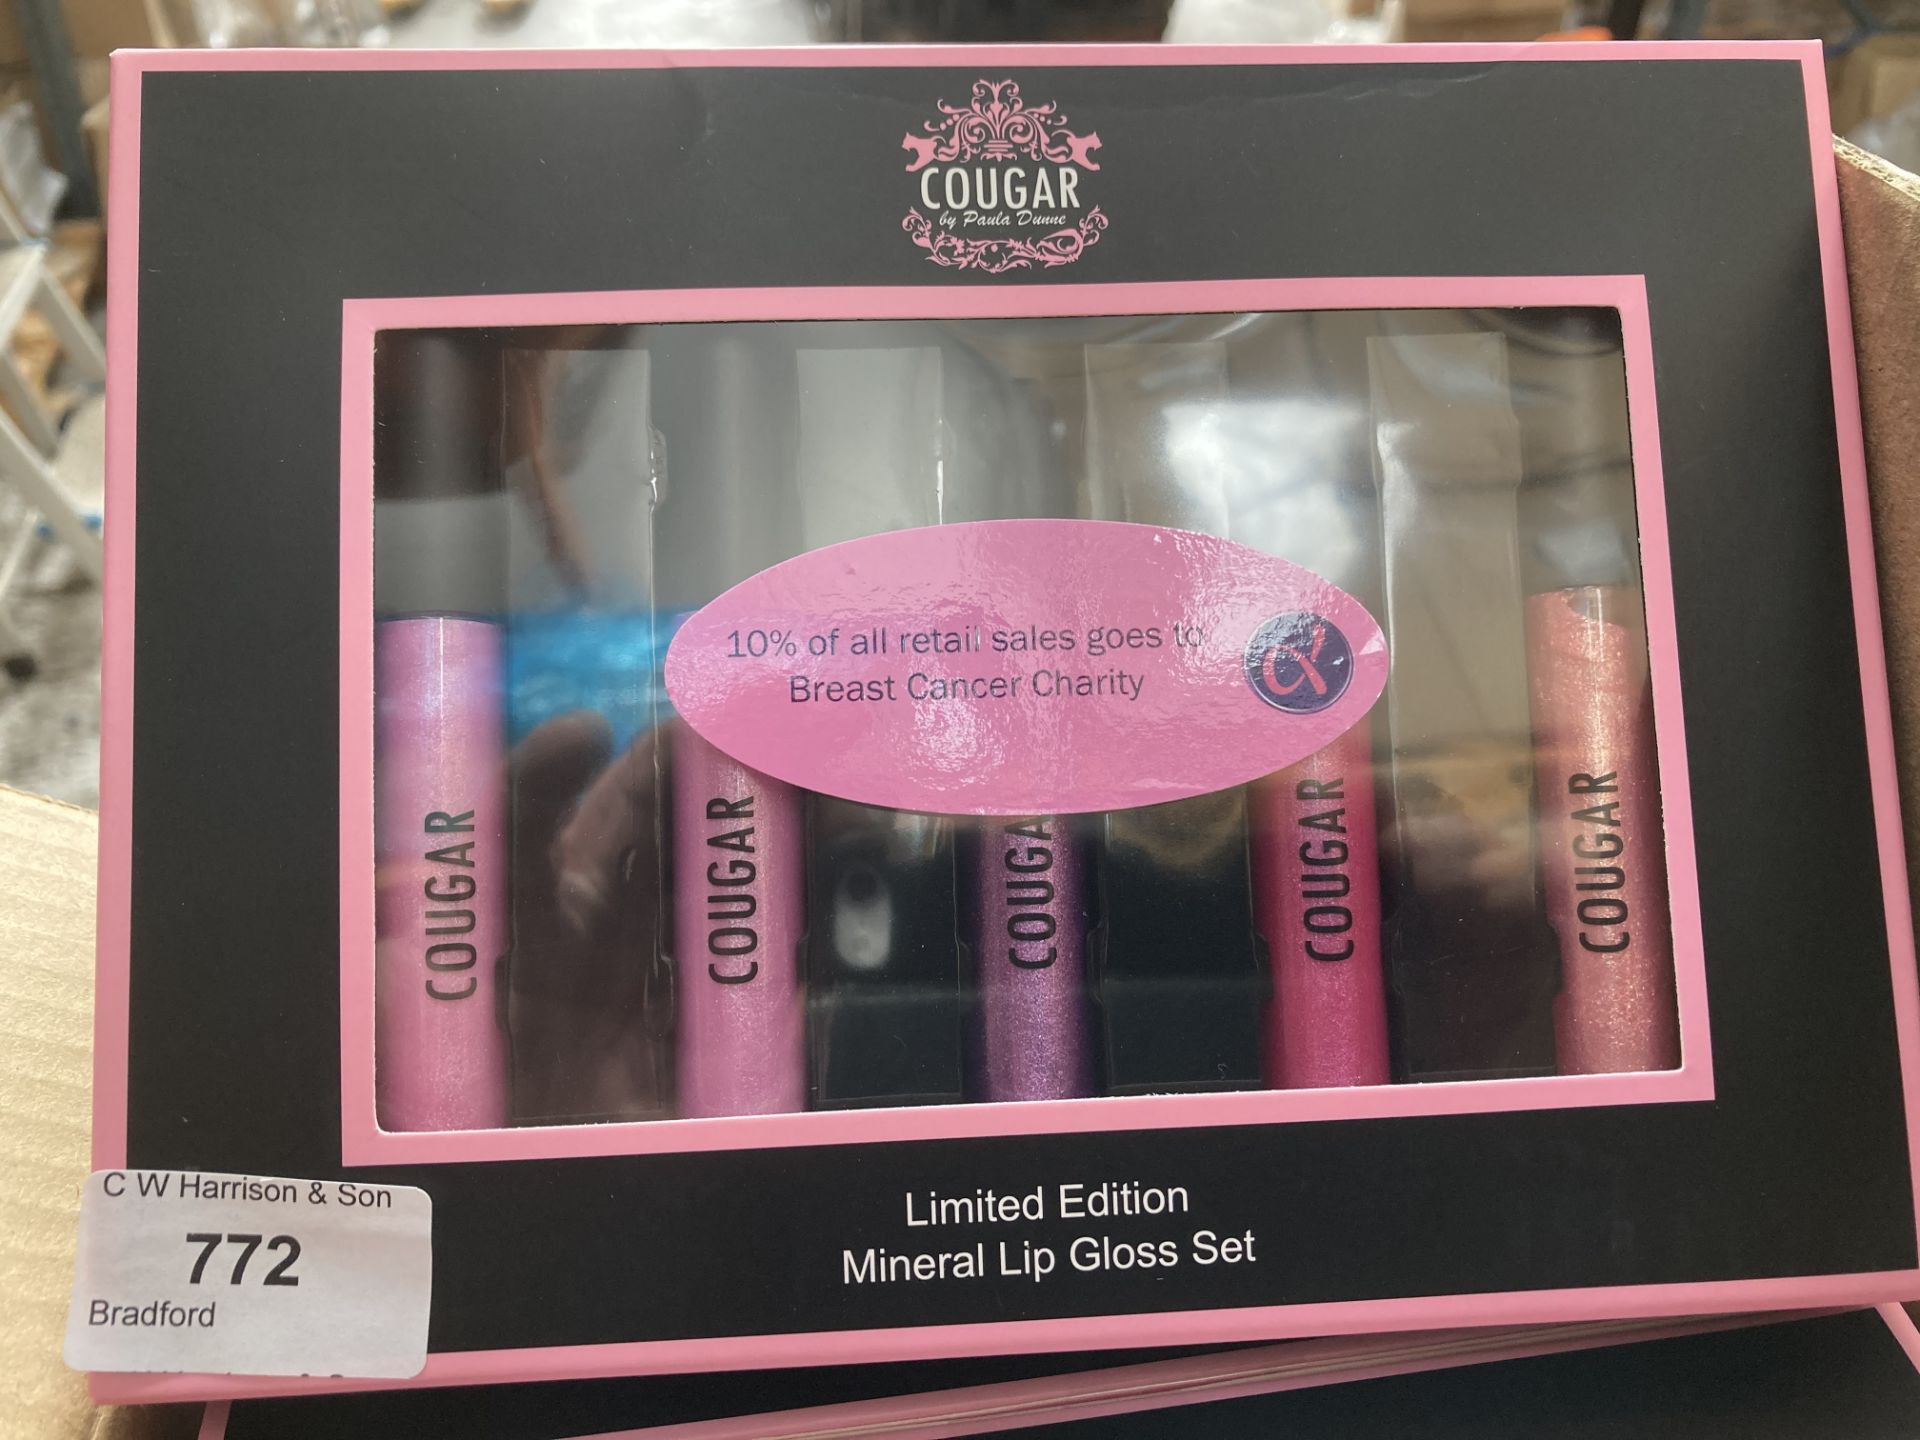 One box of Cougar Limited Edition Mineral Lip gloss sets (12 unites per box)